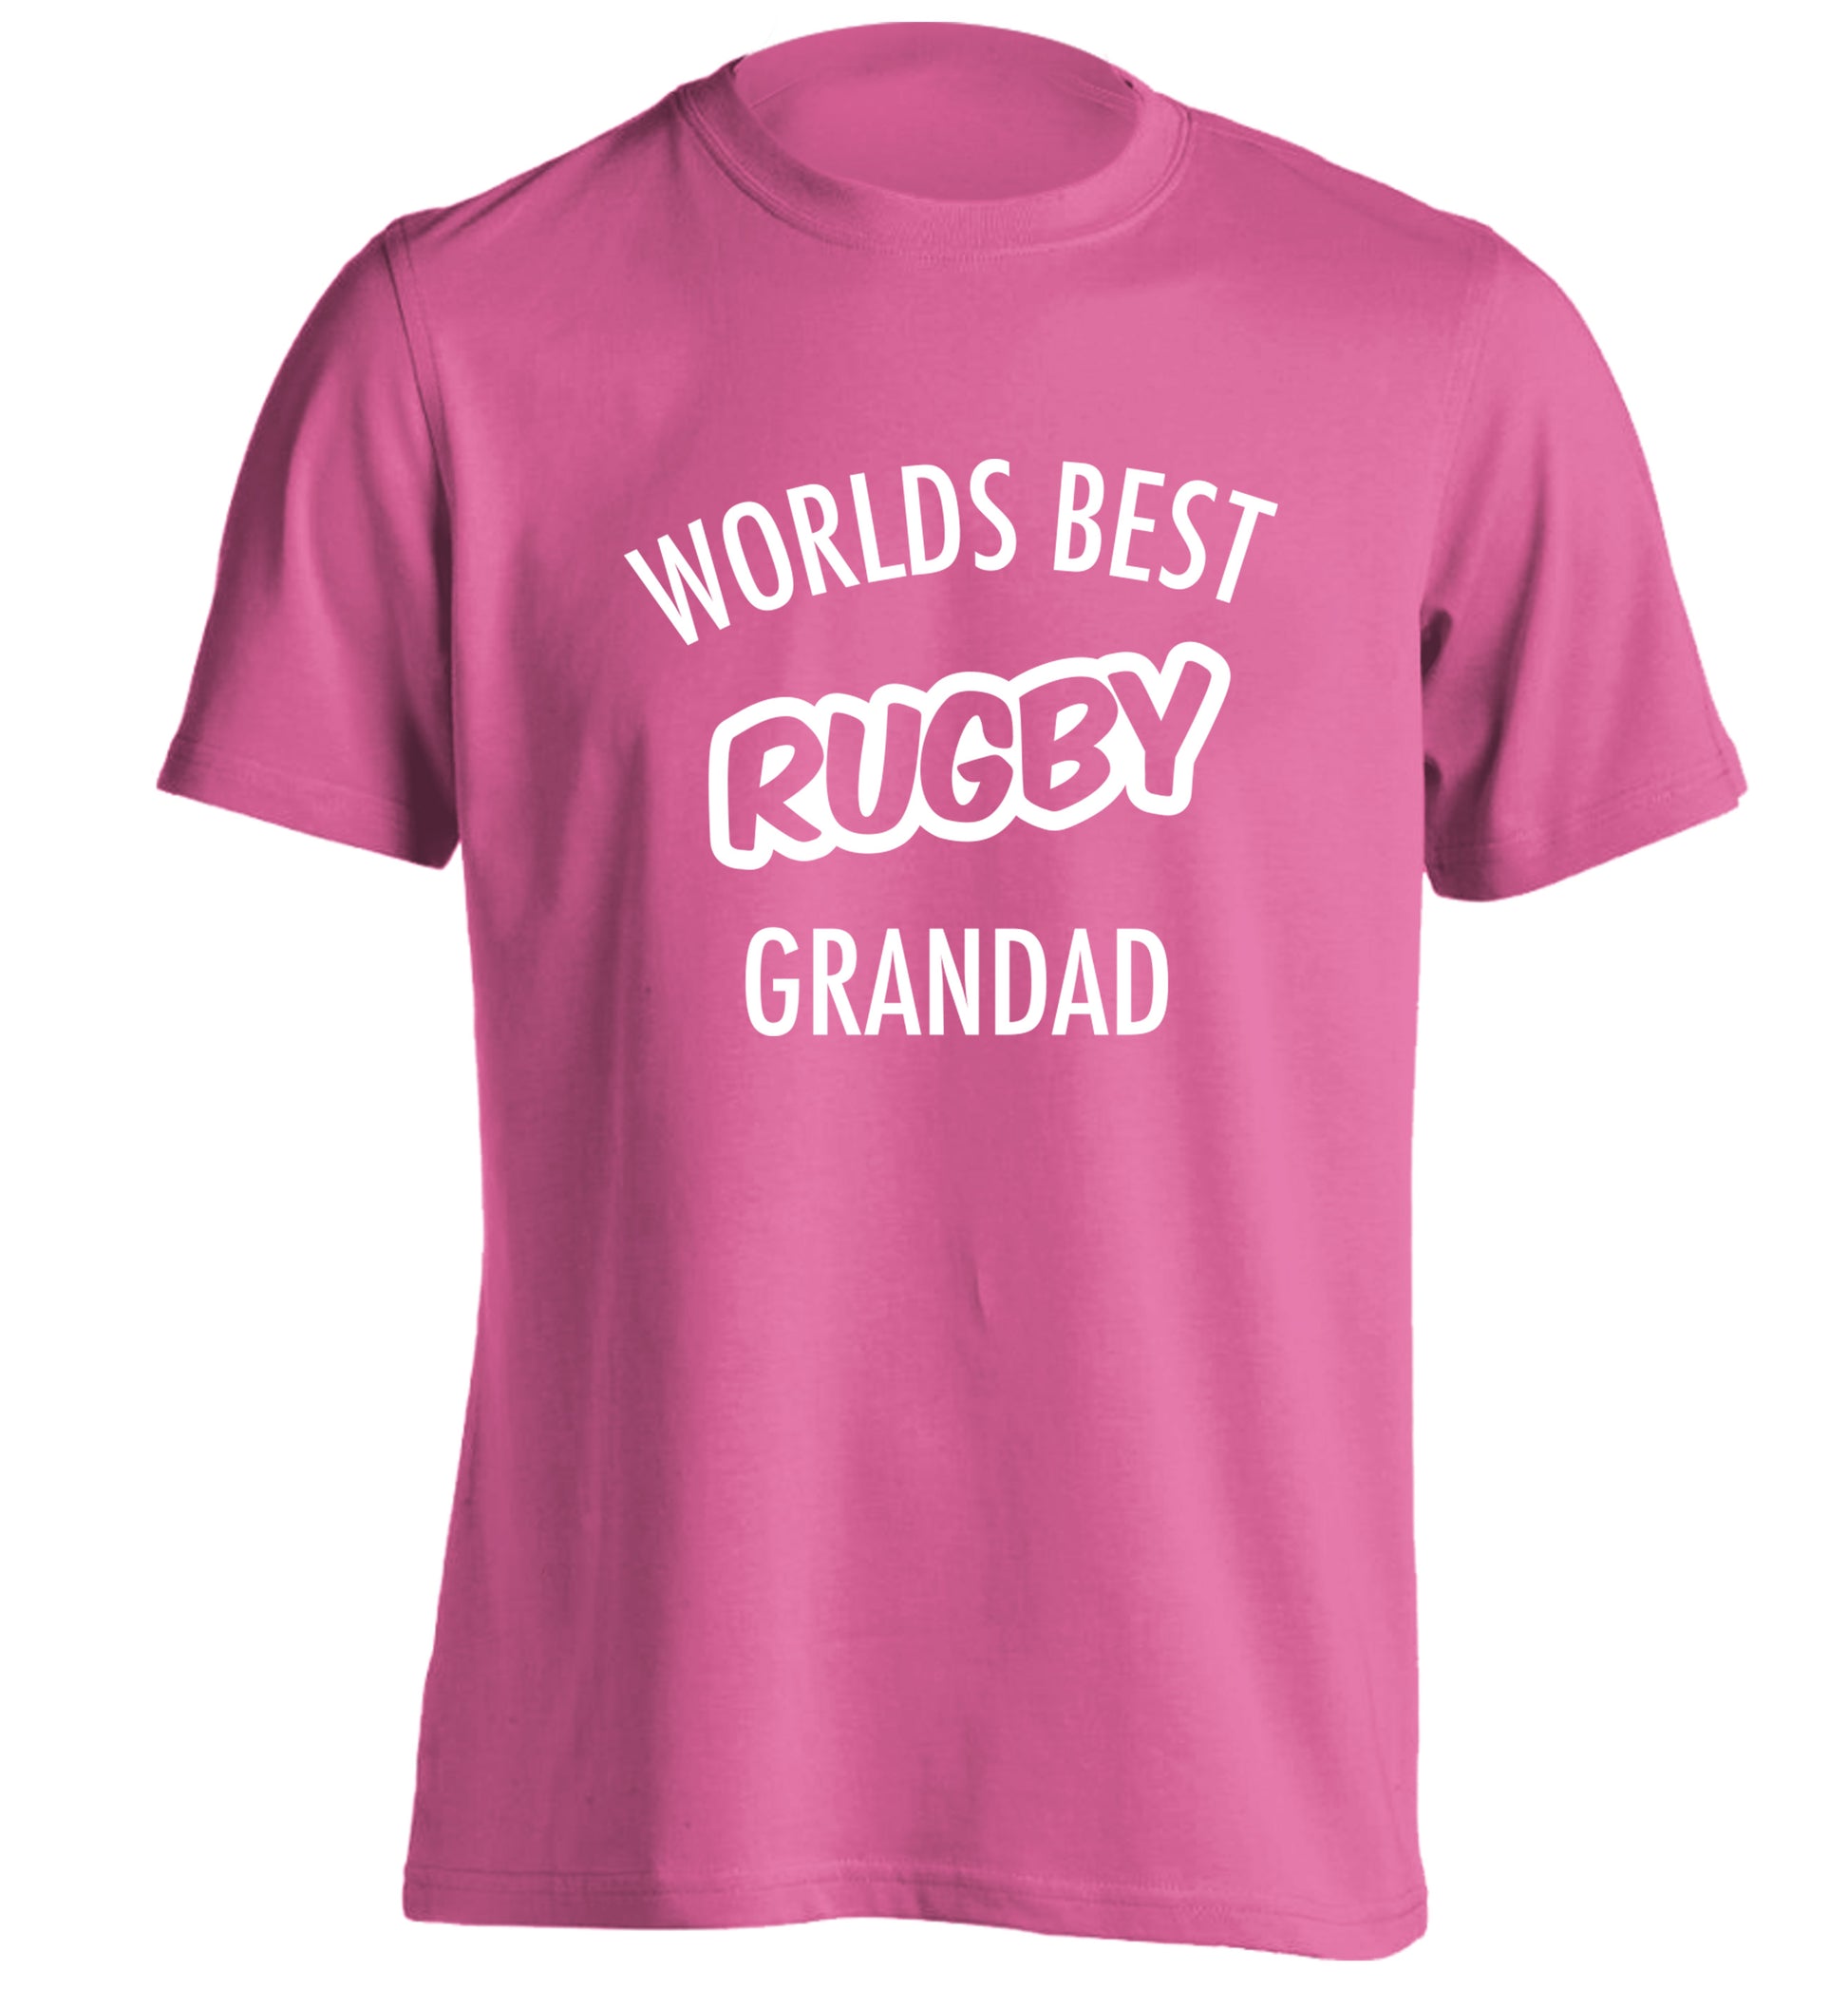 Worlds best rugby grandad adults unisex pink Tshirt 2XL